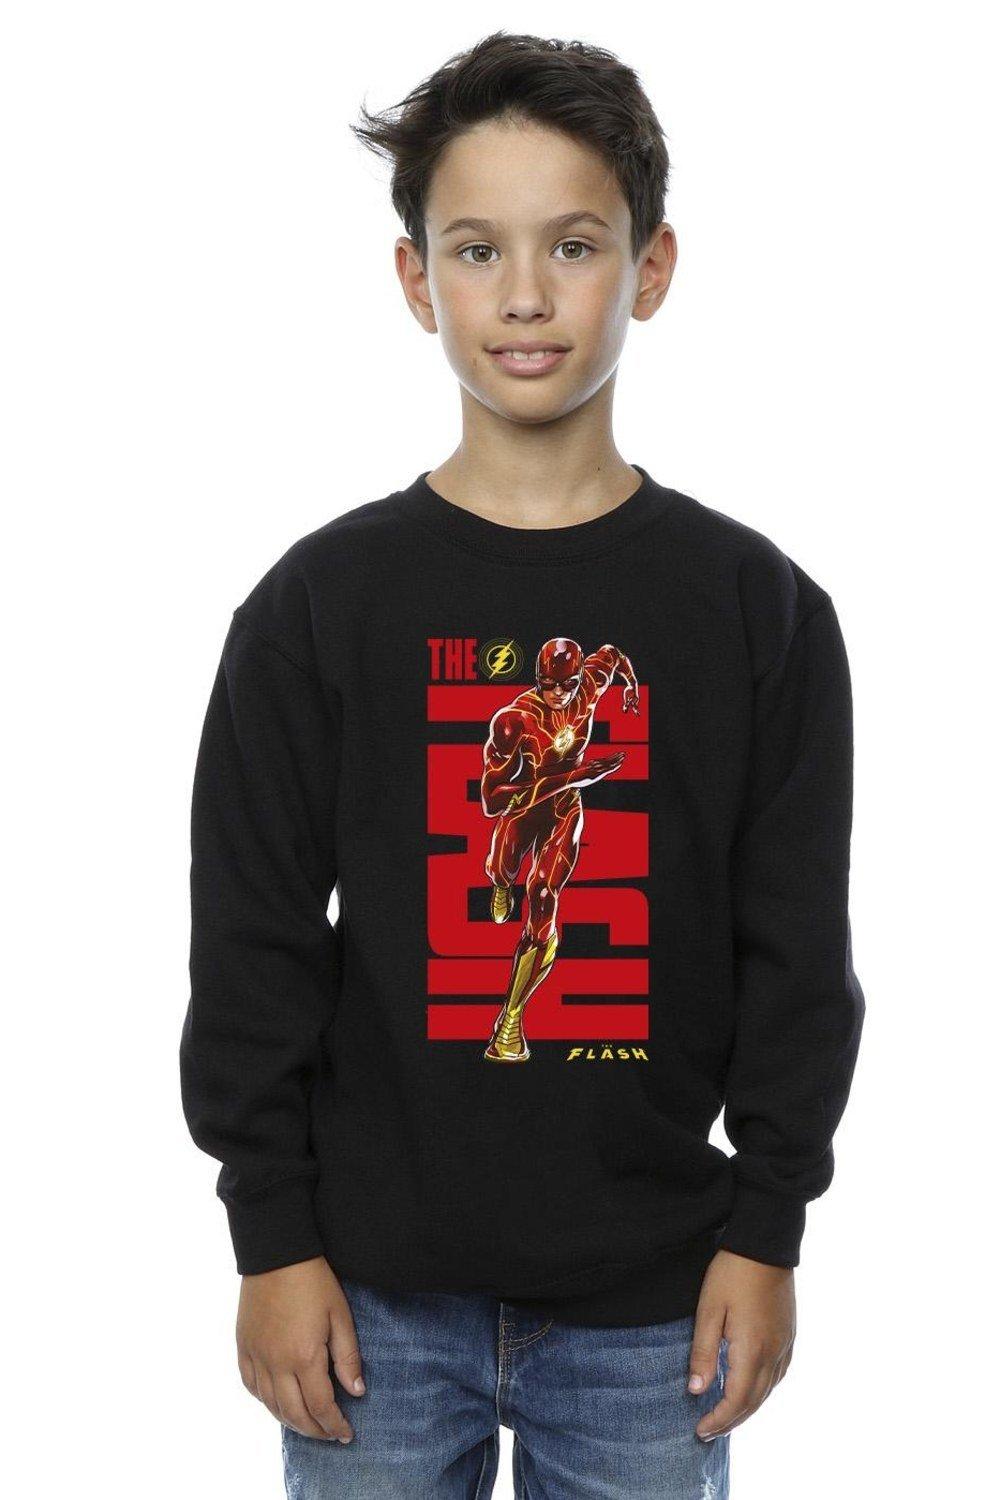 The Flash Dash Sweatshirt